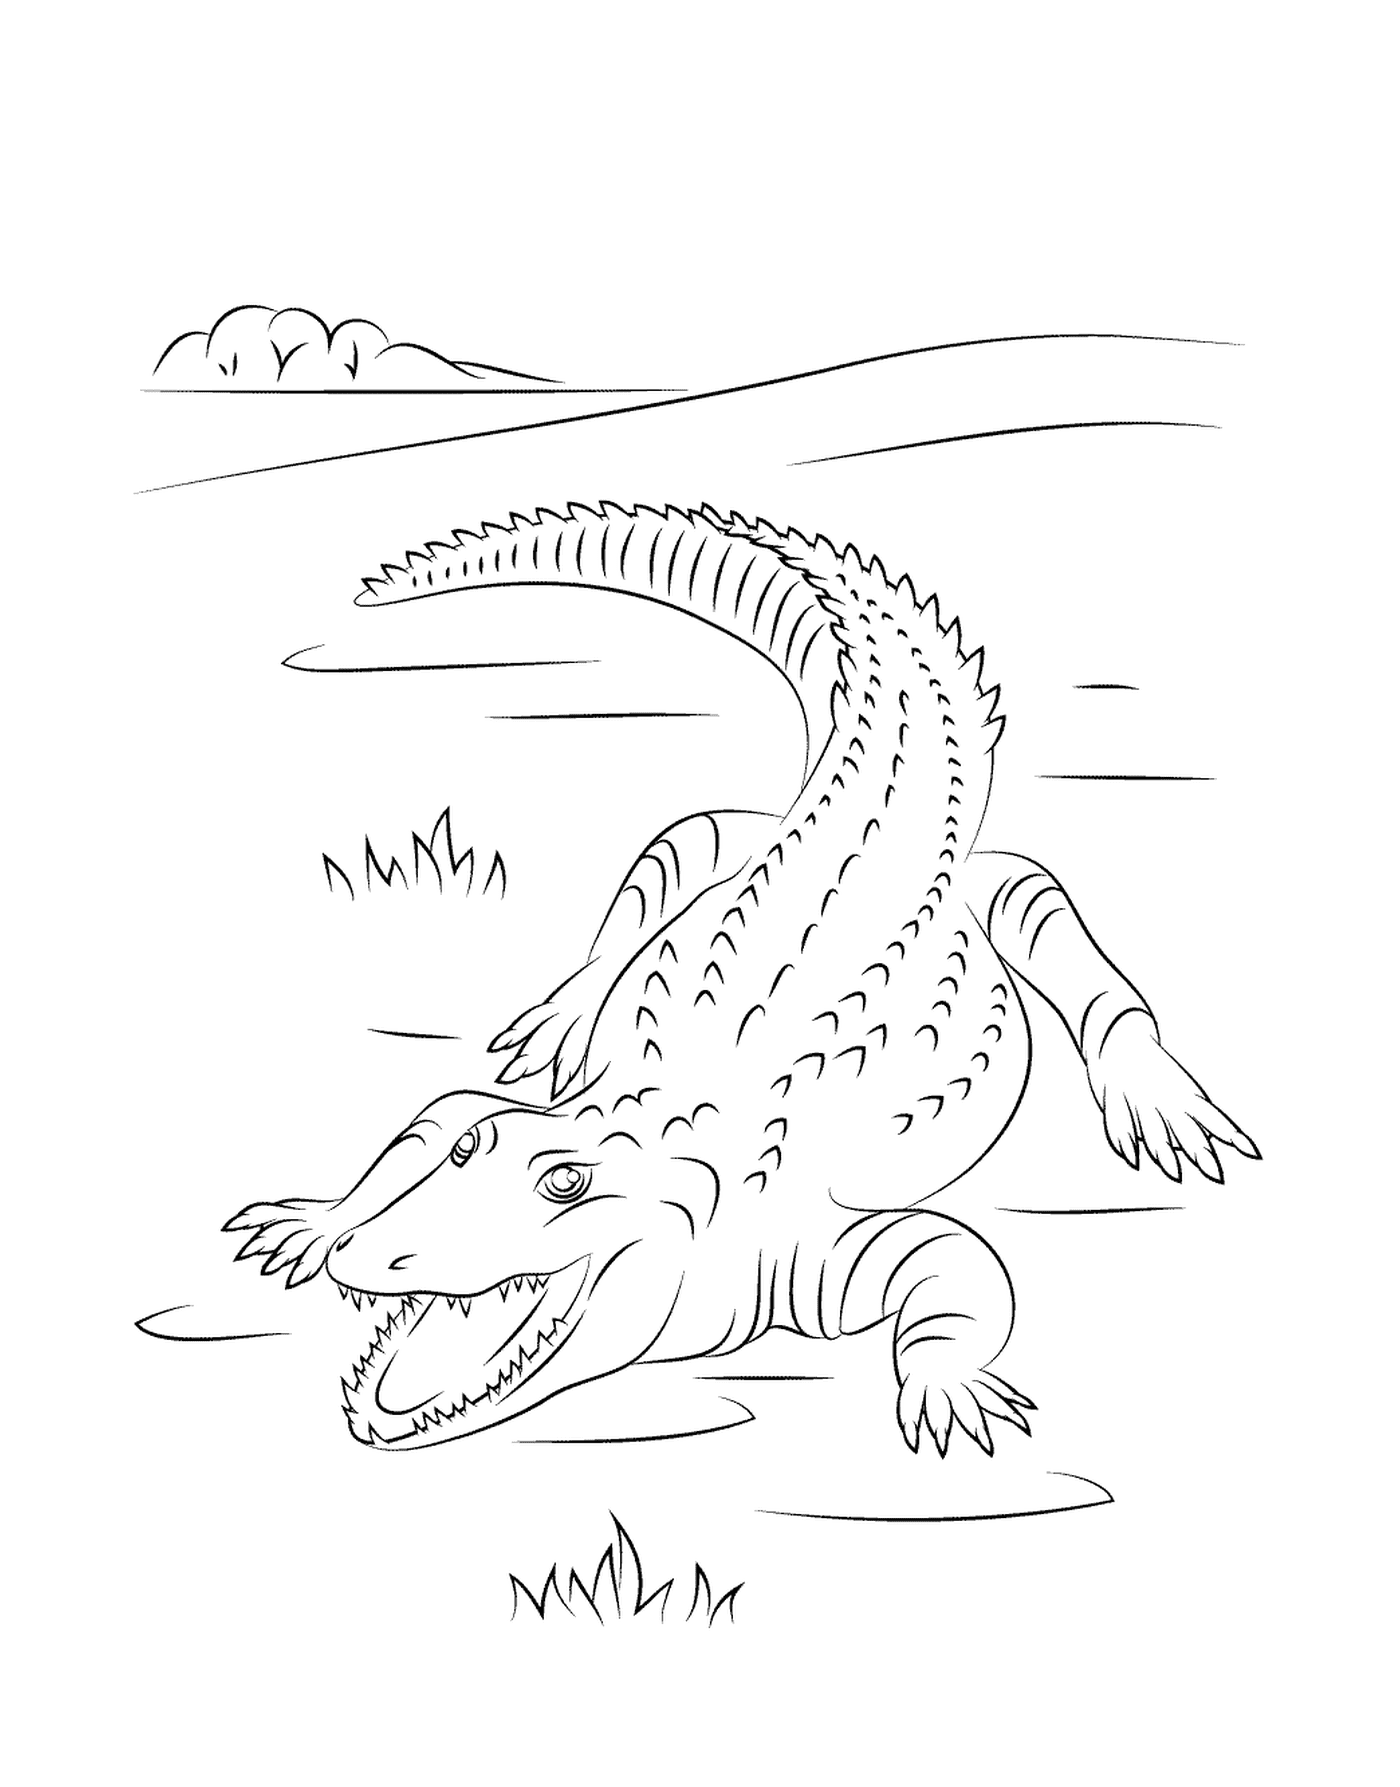  Um crocodilo bonito do Nilo na água 